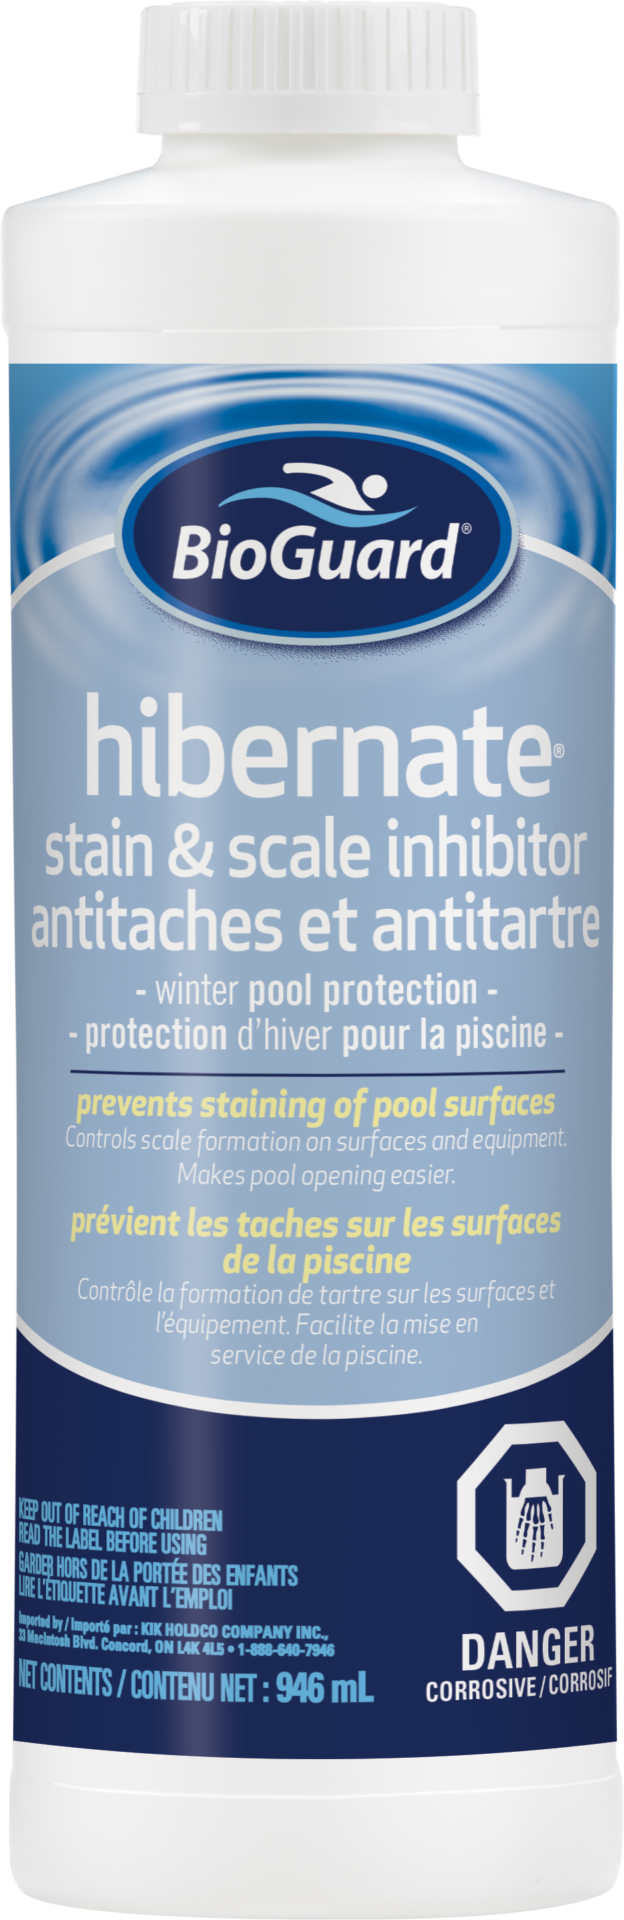 BioGuard Hibernate Stain Scale Inhibitor 946ml - BioGuard Hibernate Stain & Scale Inhibitor 946ml